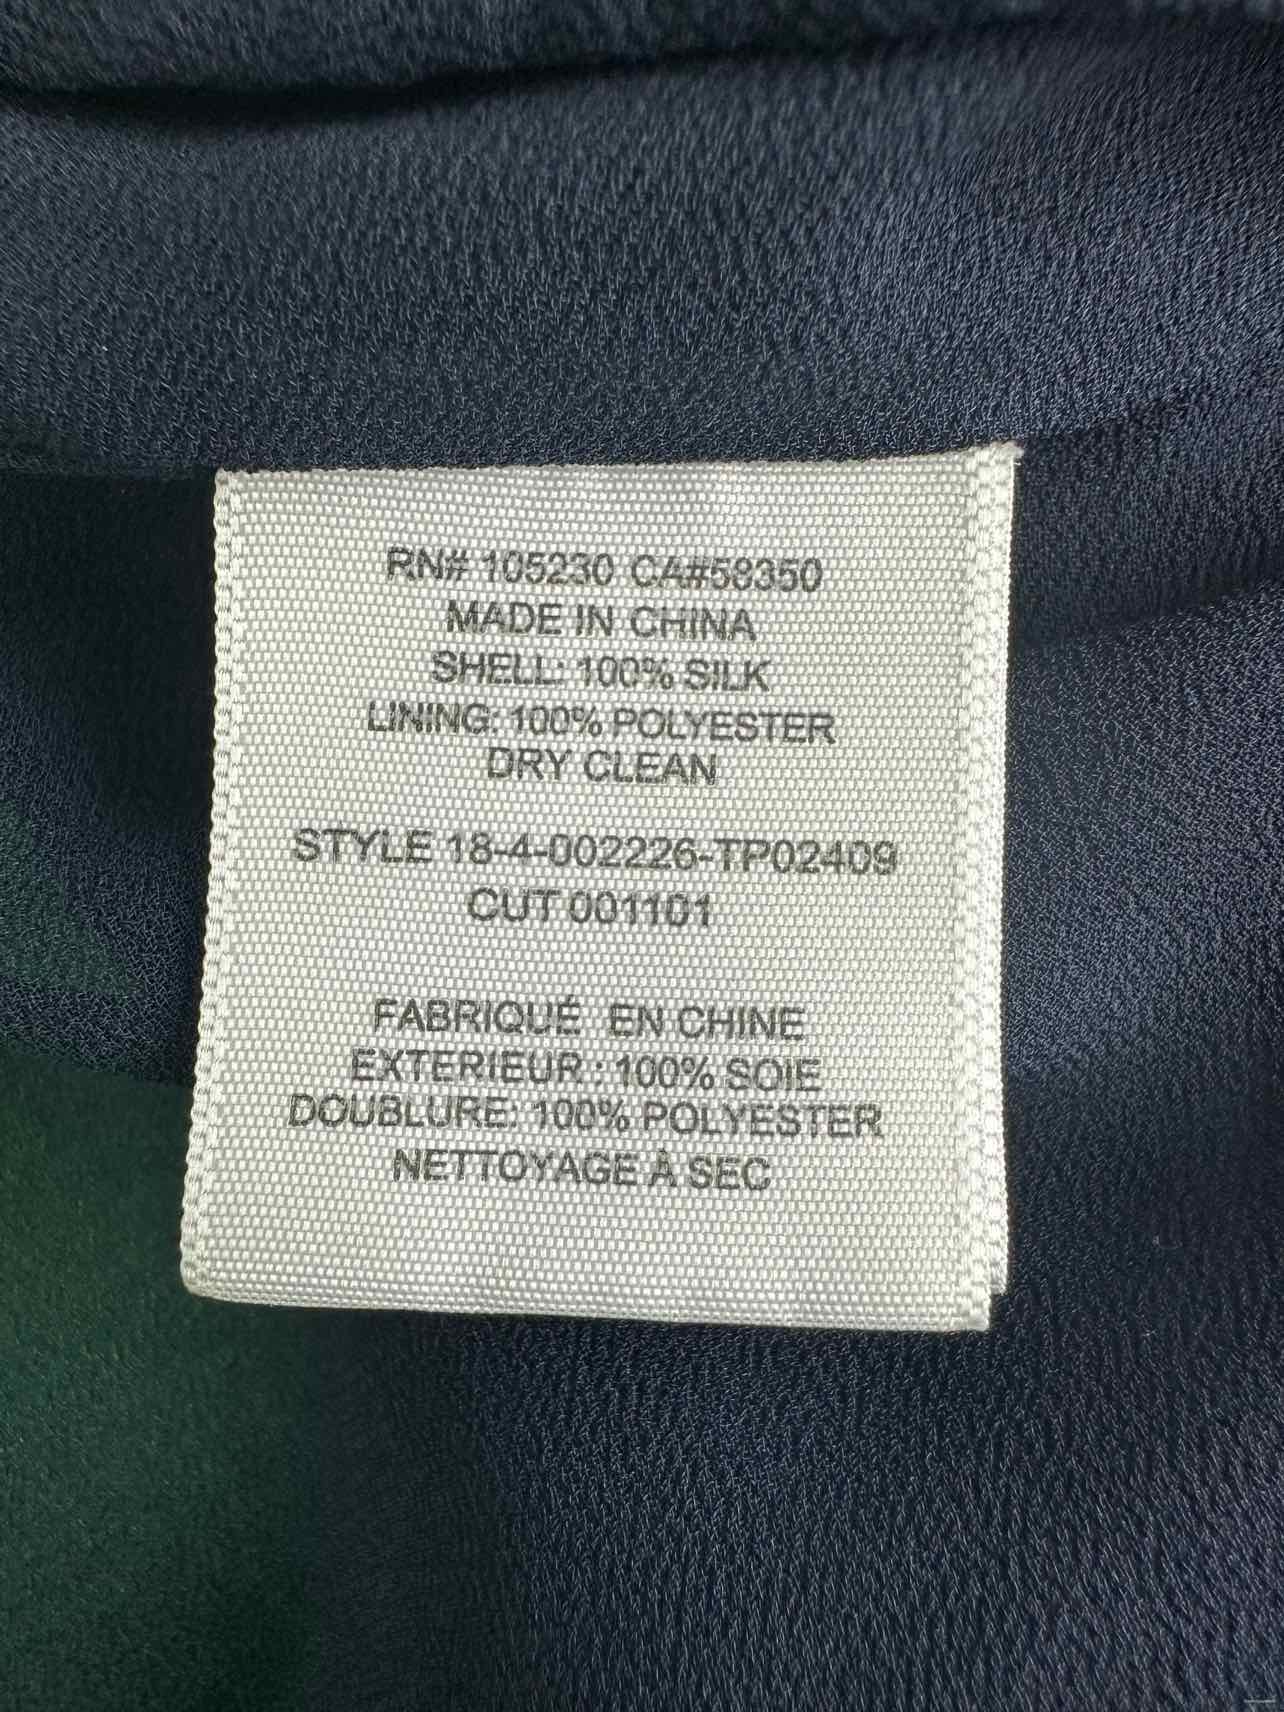 joie Navy 100% Silk Blouse Size M